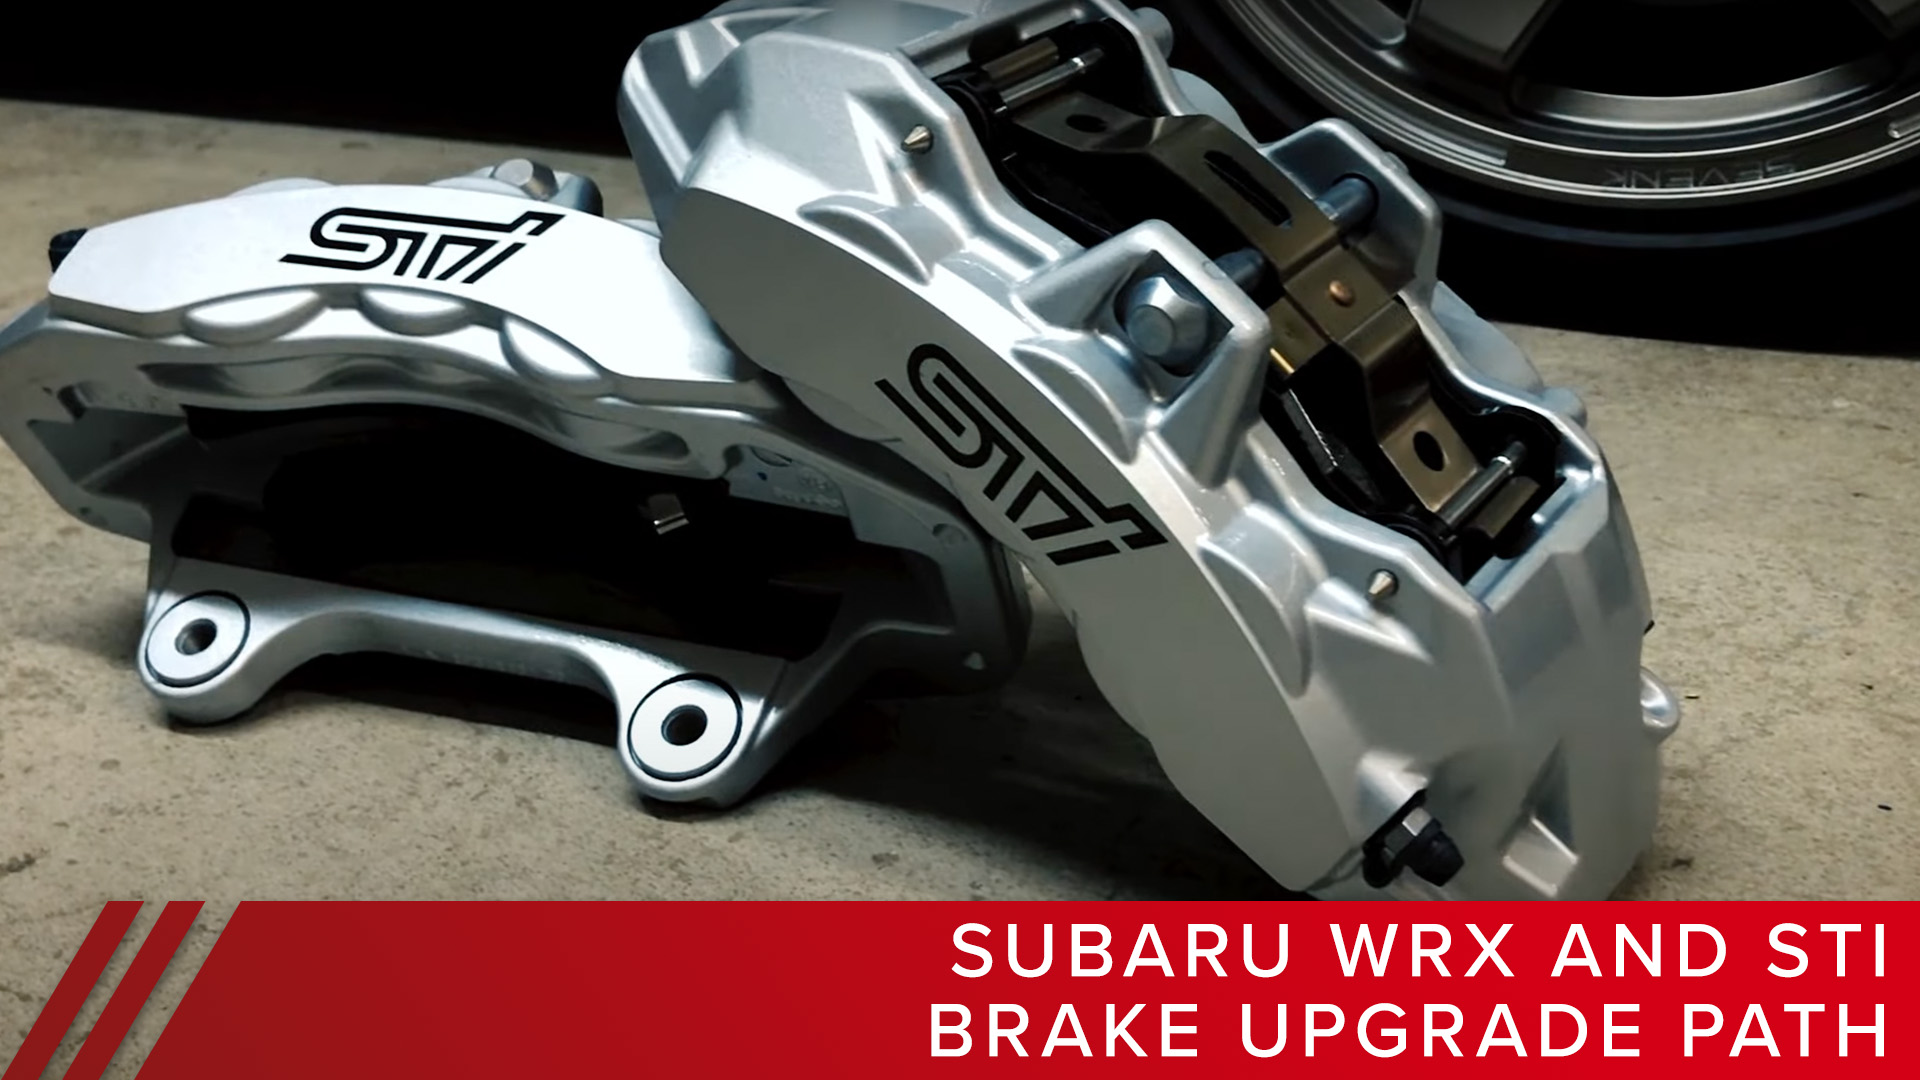 A Brake Upgrade path for the Subaru WRX and STI